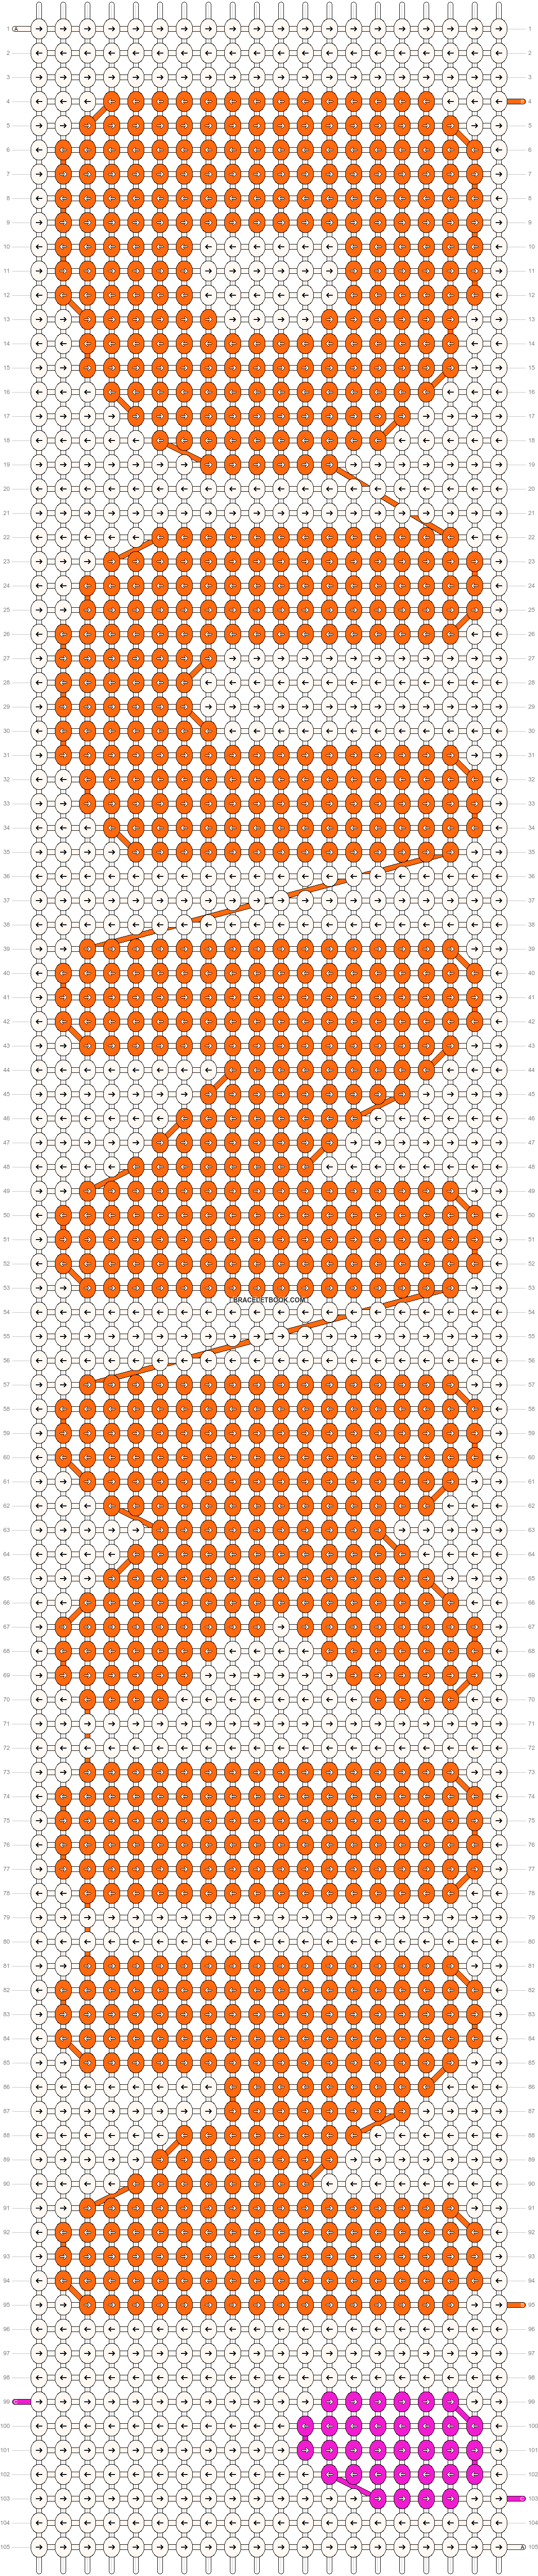 Alpha pattern #41178 pattern